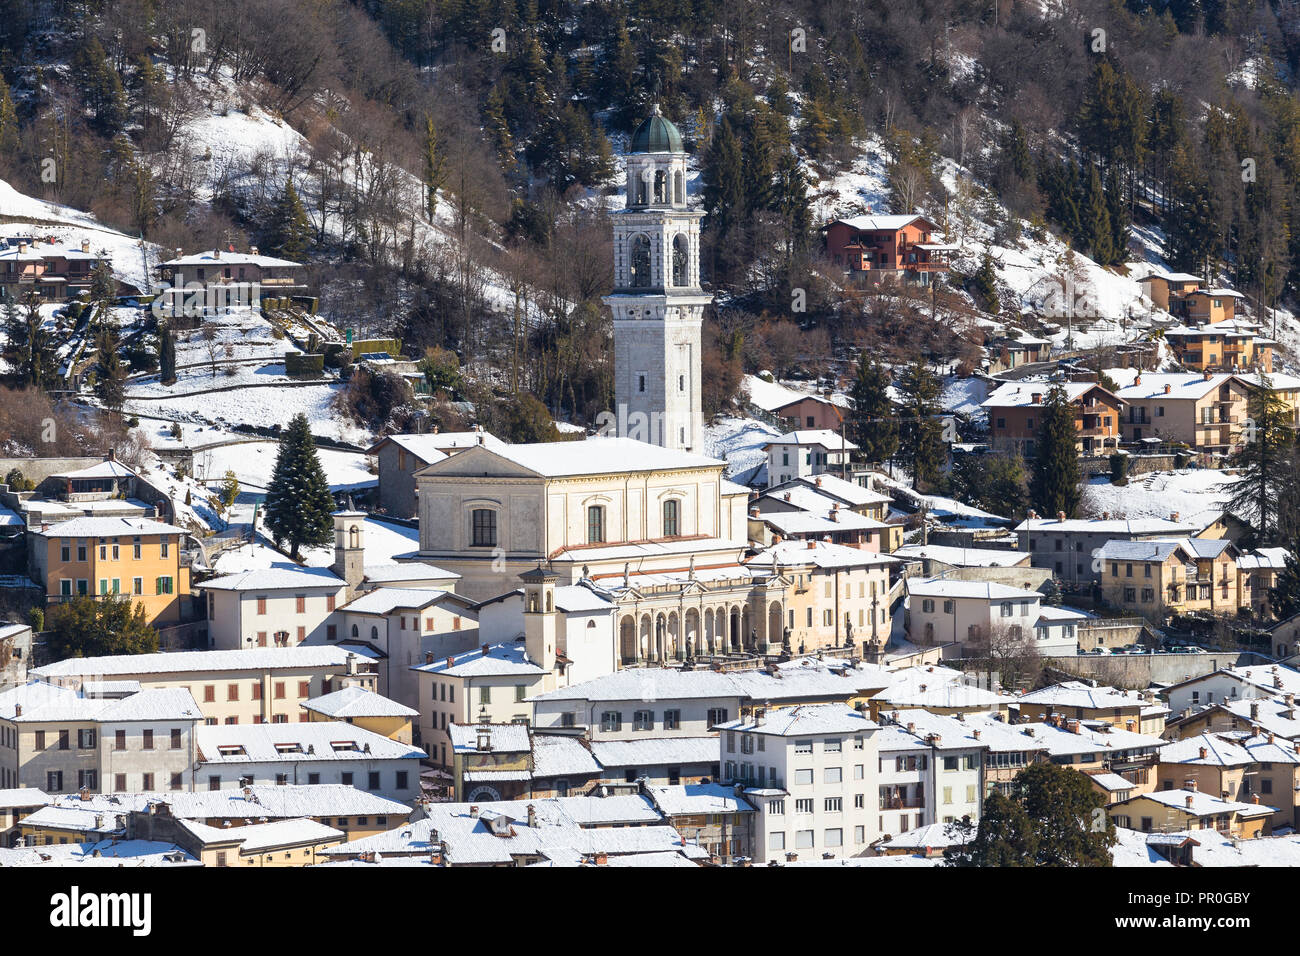 Church of the village of Clusone in winter, Clusone, Val Seriana, Bergamo province, Lombardy, Italy, Europe Stock Photo